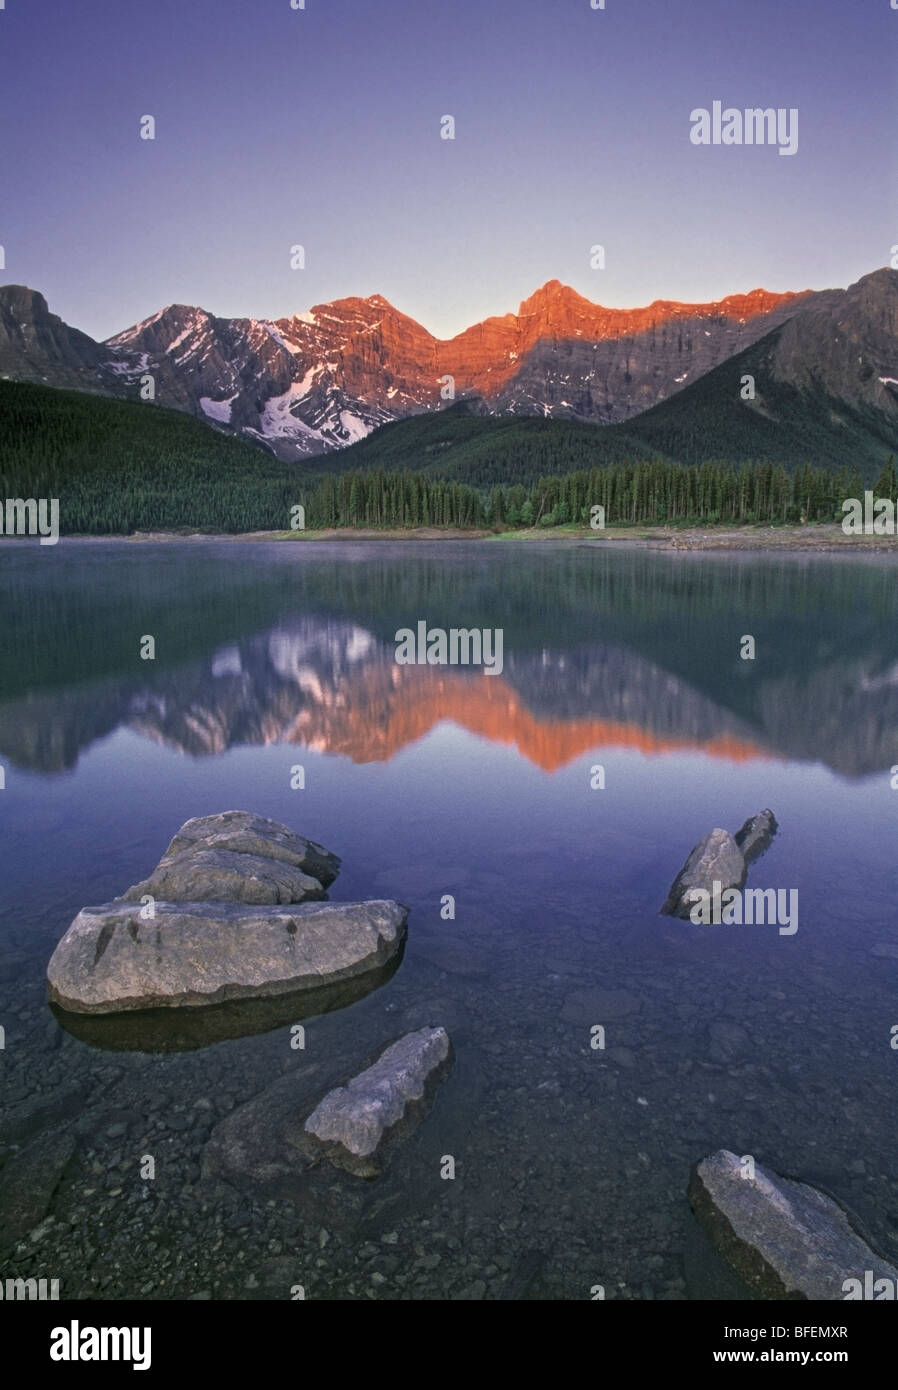 La région de Kananaskis, Lake Parc provincial Peter Lougheed, Kanananskis Country, Alberta, Canada Banque D'Images